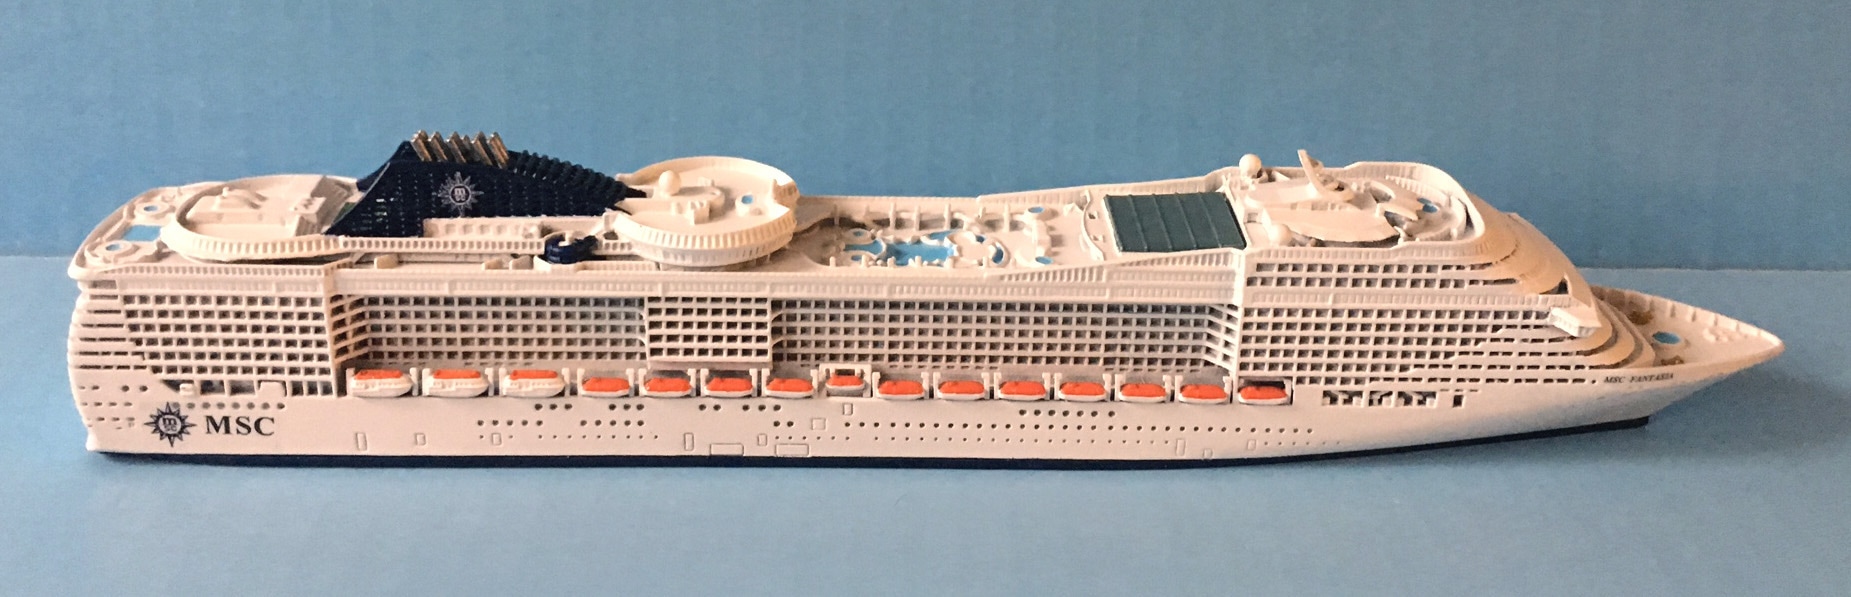 MSC Fantasia cruise ship model Picture